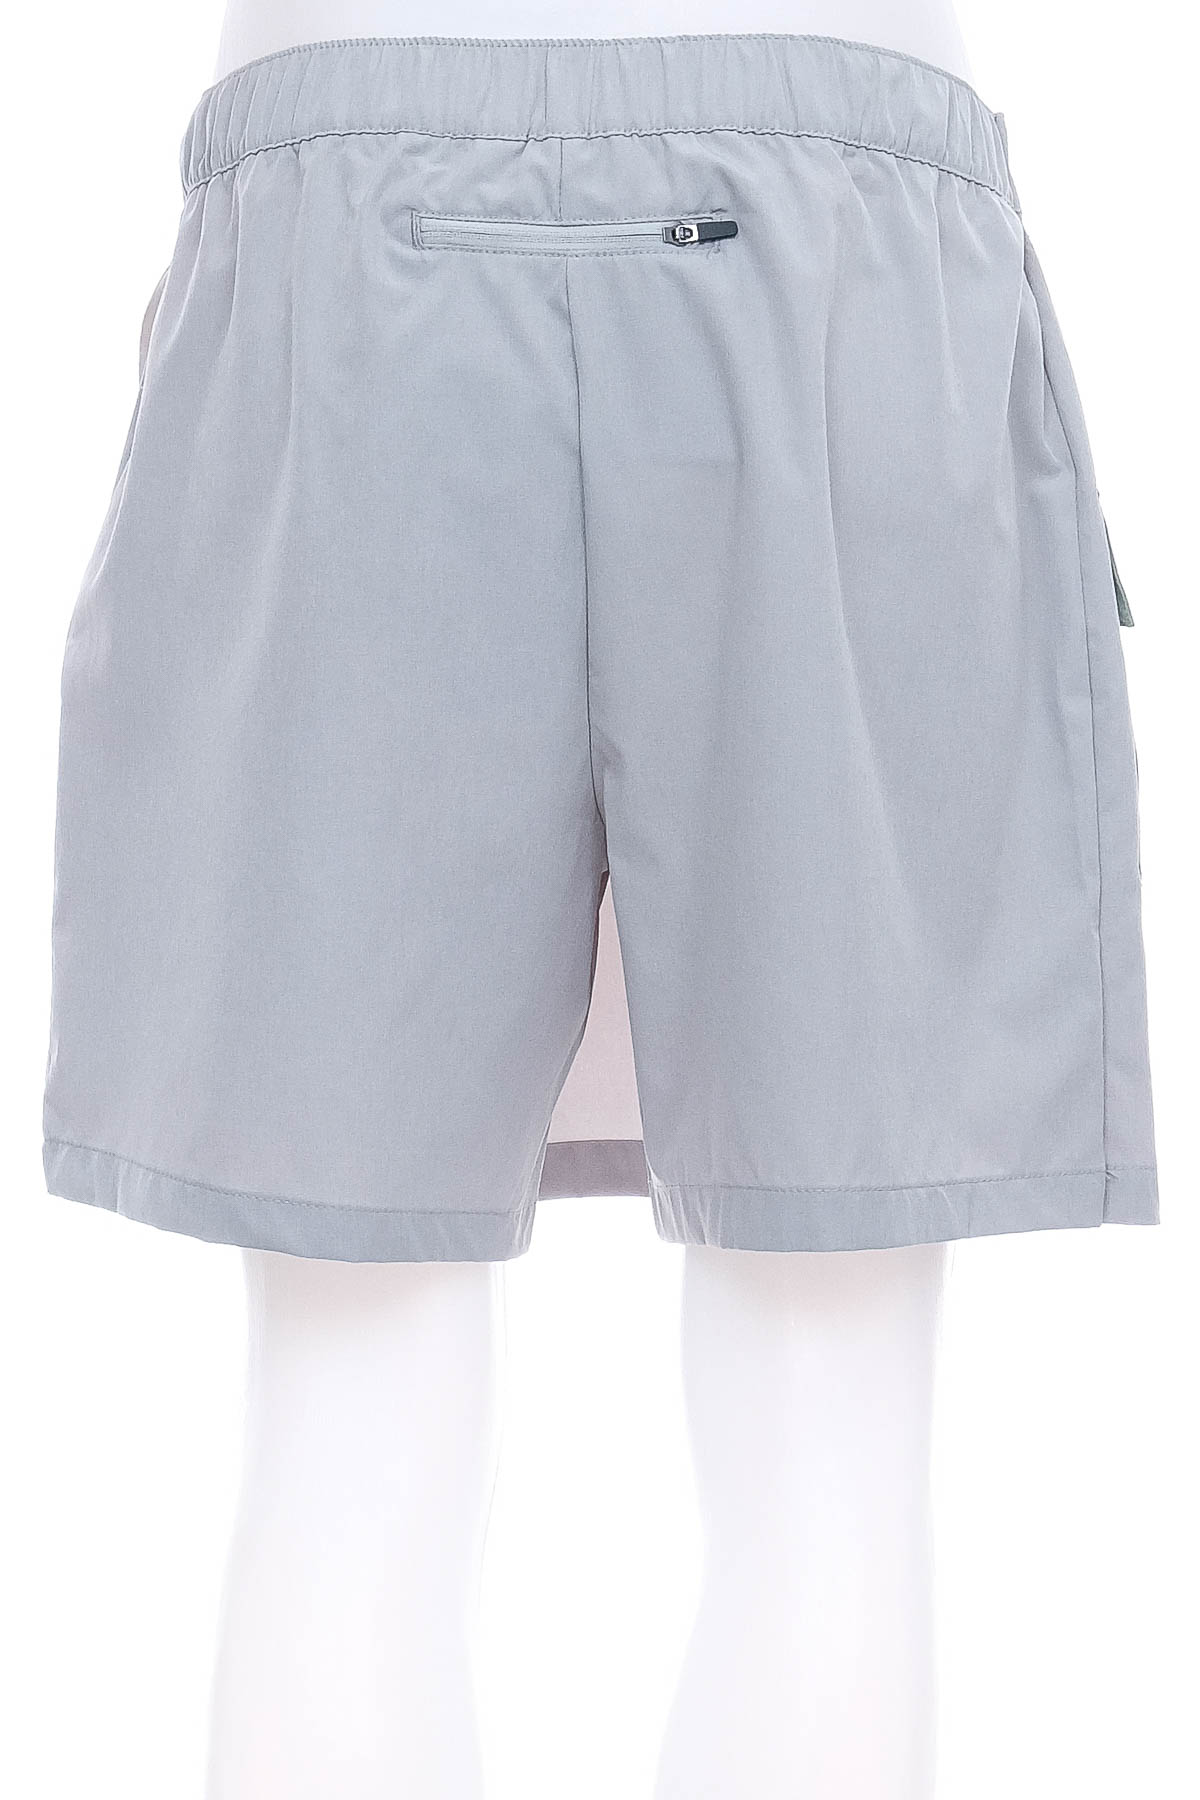 Skirt - pants - Crane - 1